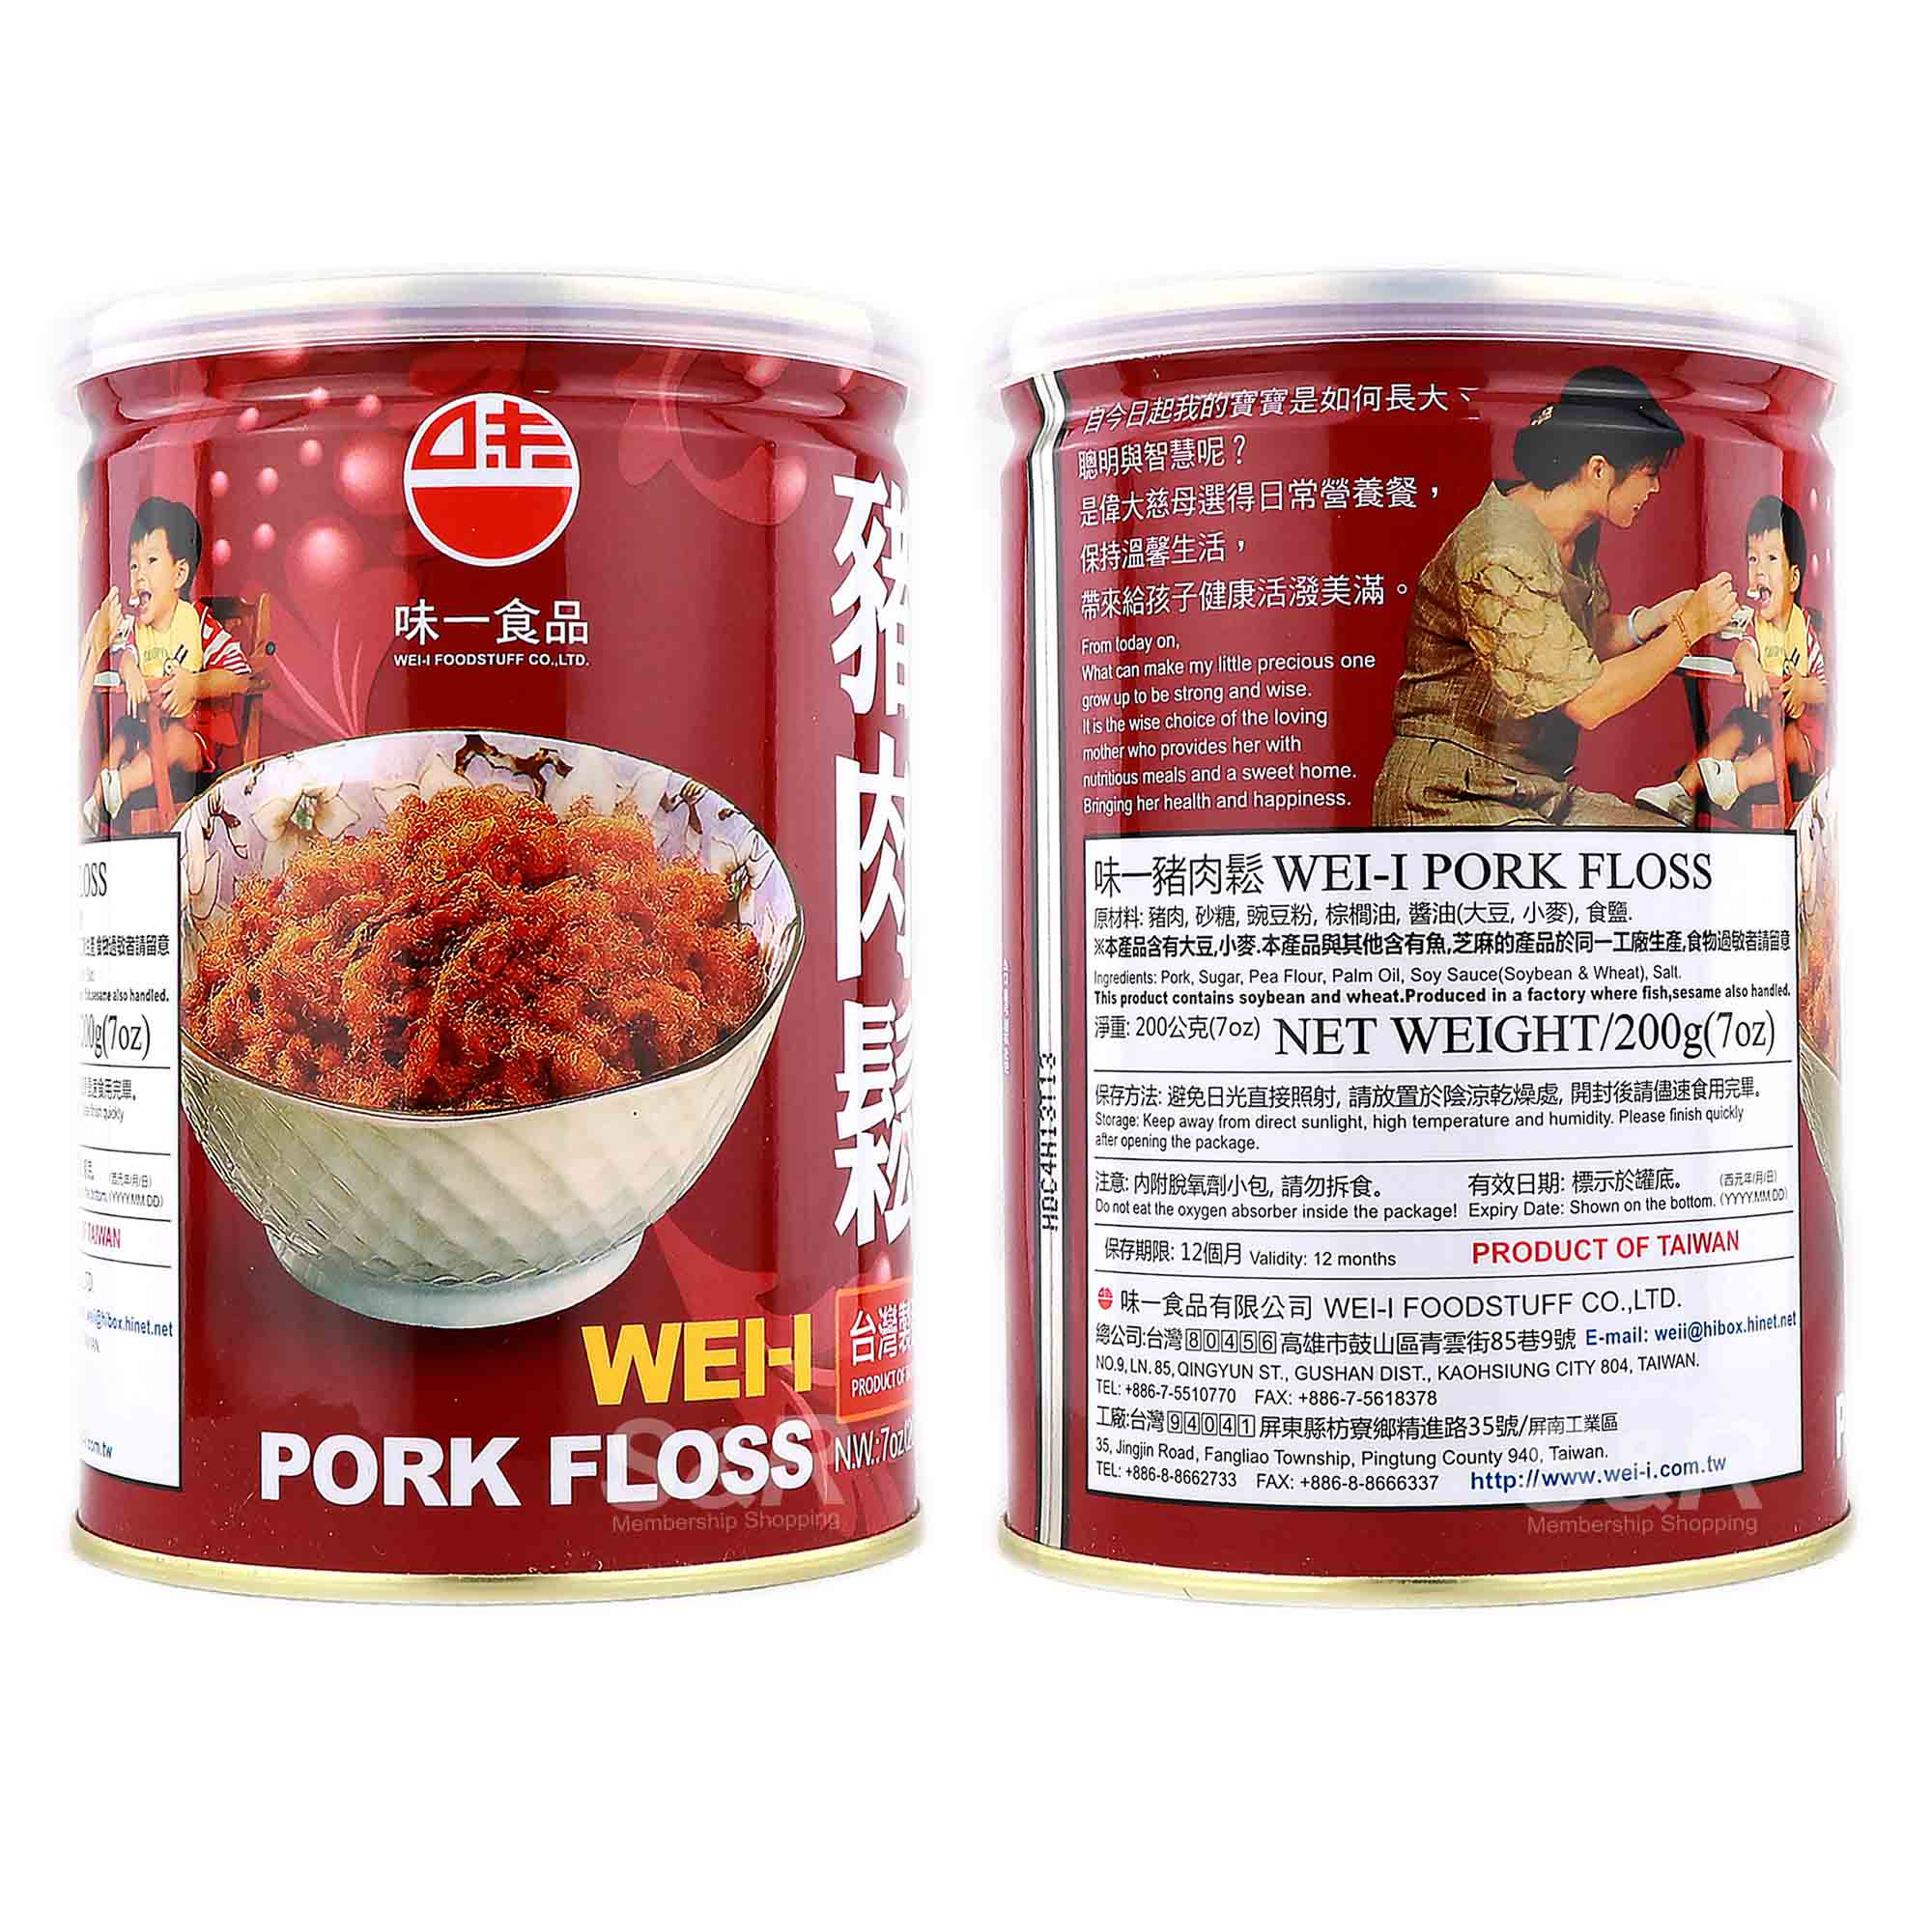 Pork Floss